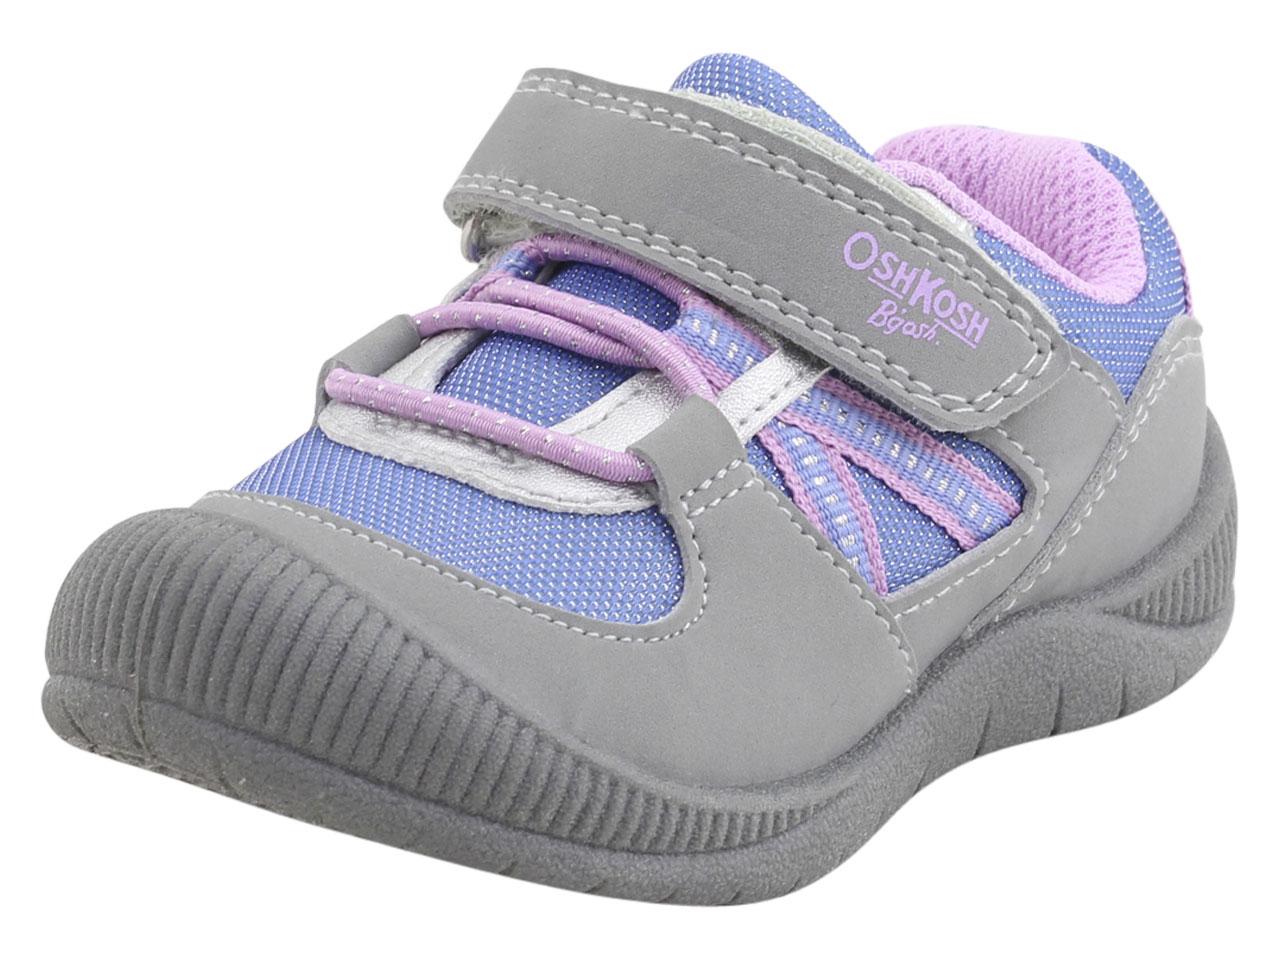 OshKosh B'gosh Toddler/Little Girl's Rafa Sneakers Shoes